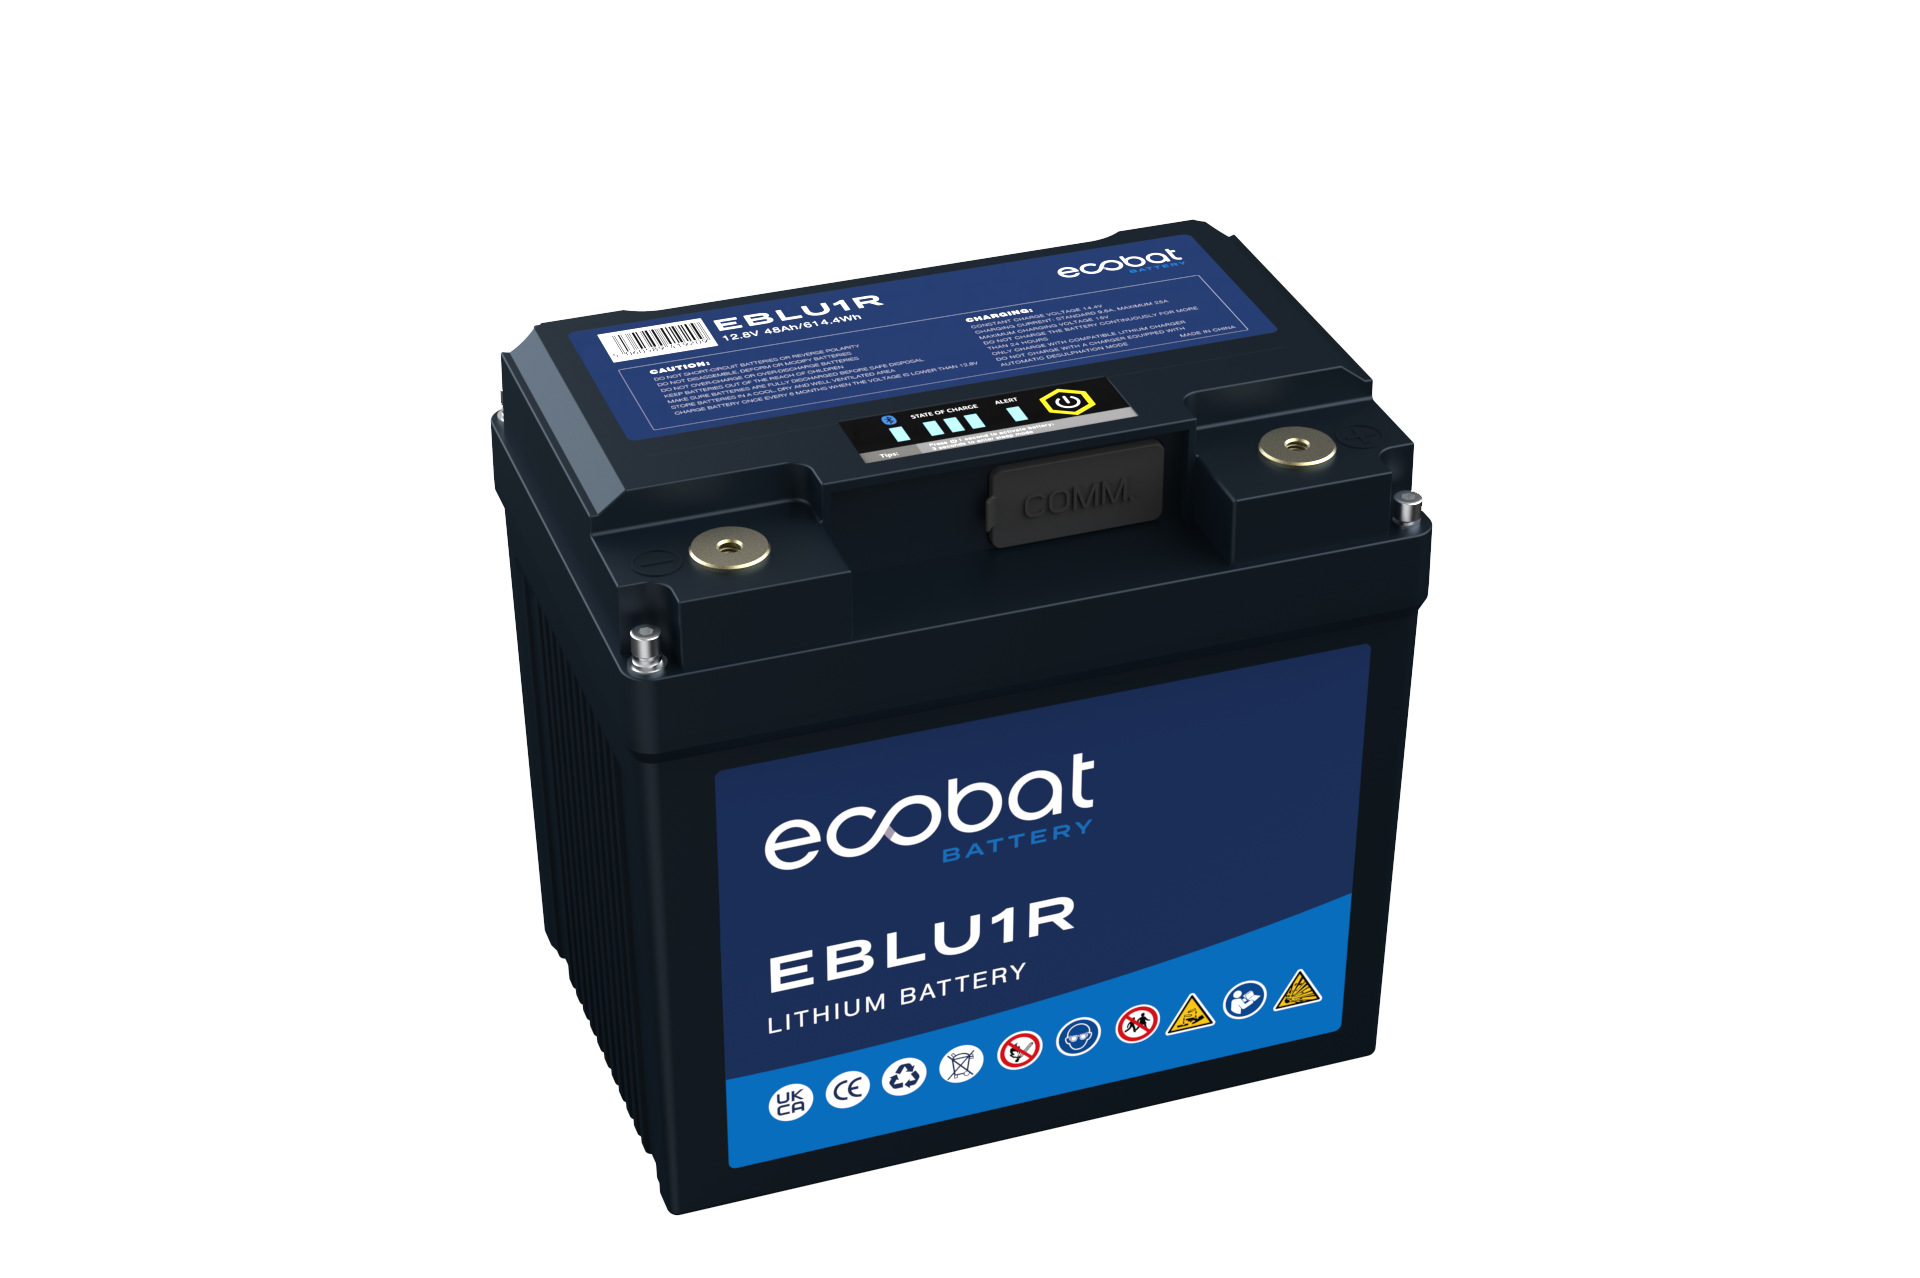 Ecobat EBLU1R Lithium Leisure Battery